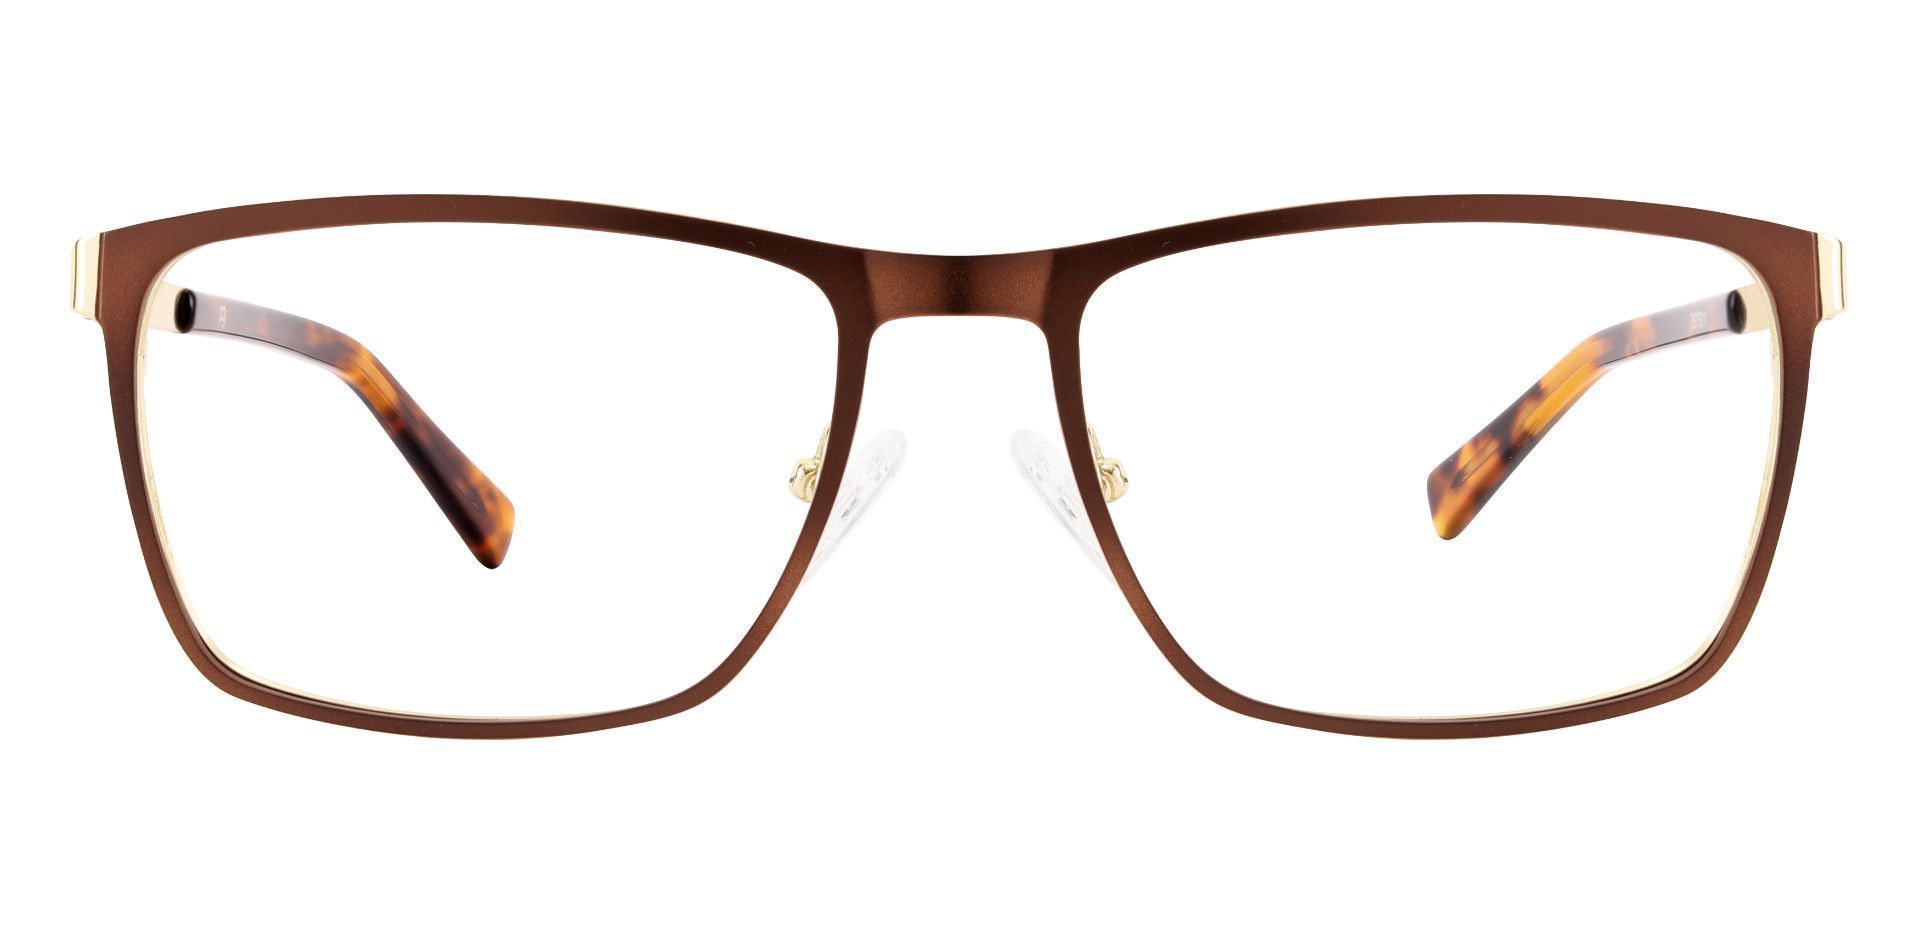 Brashear Rectangle Prescription Glasses - Brown